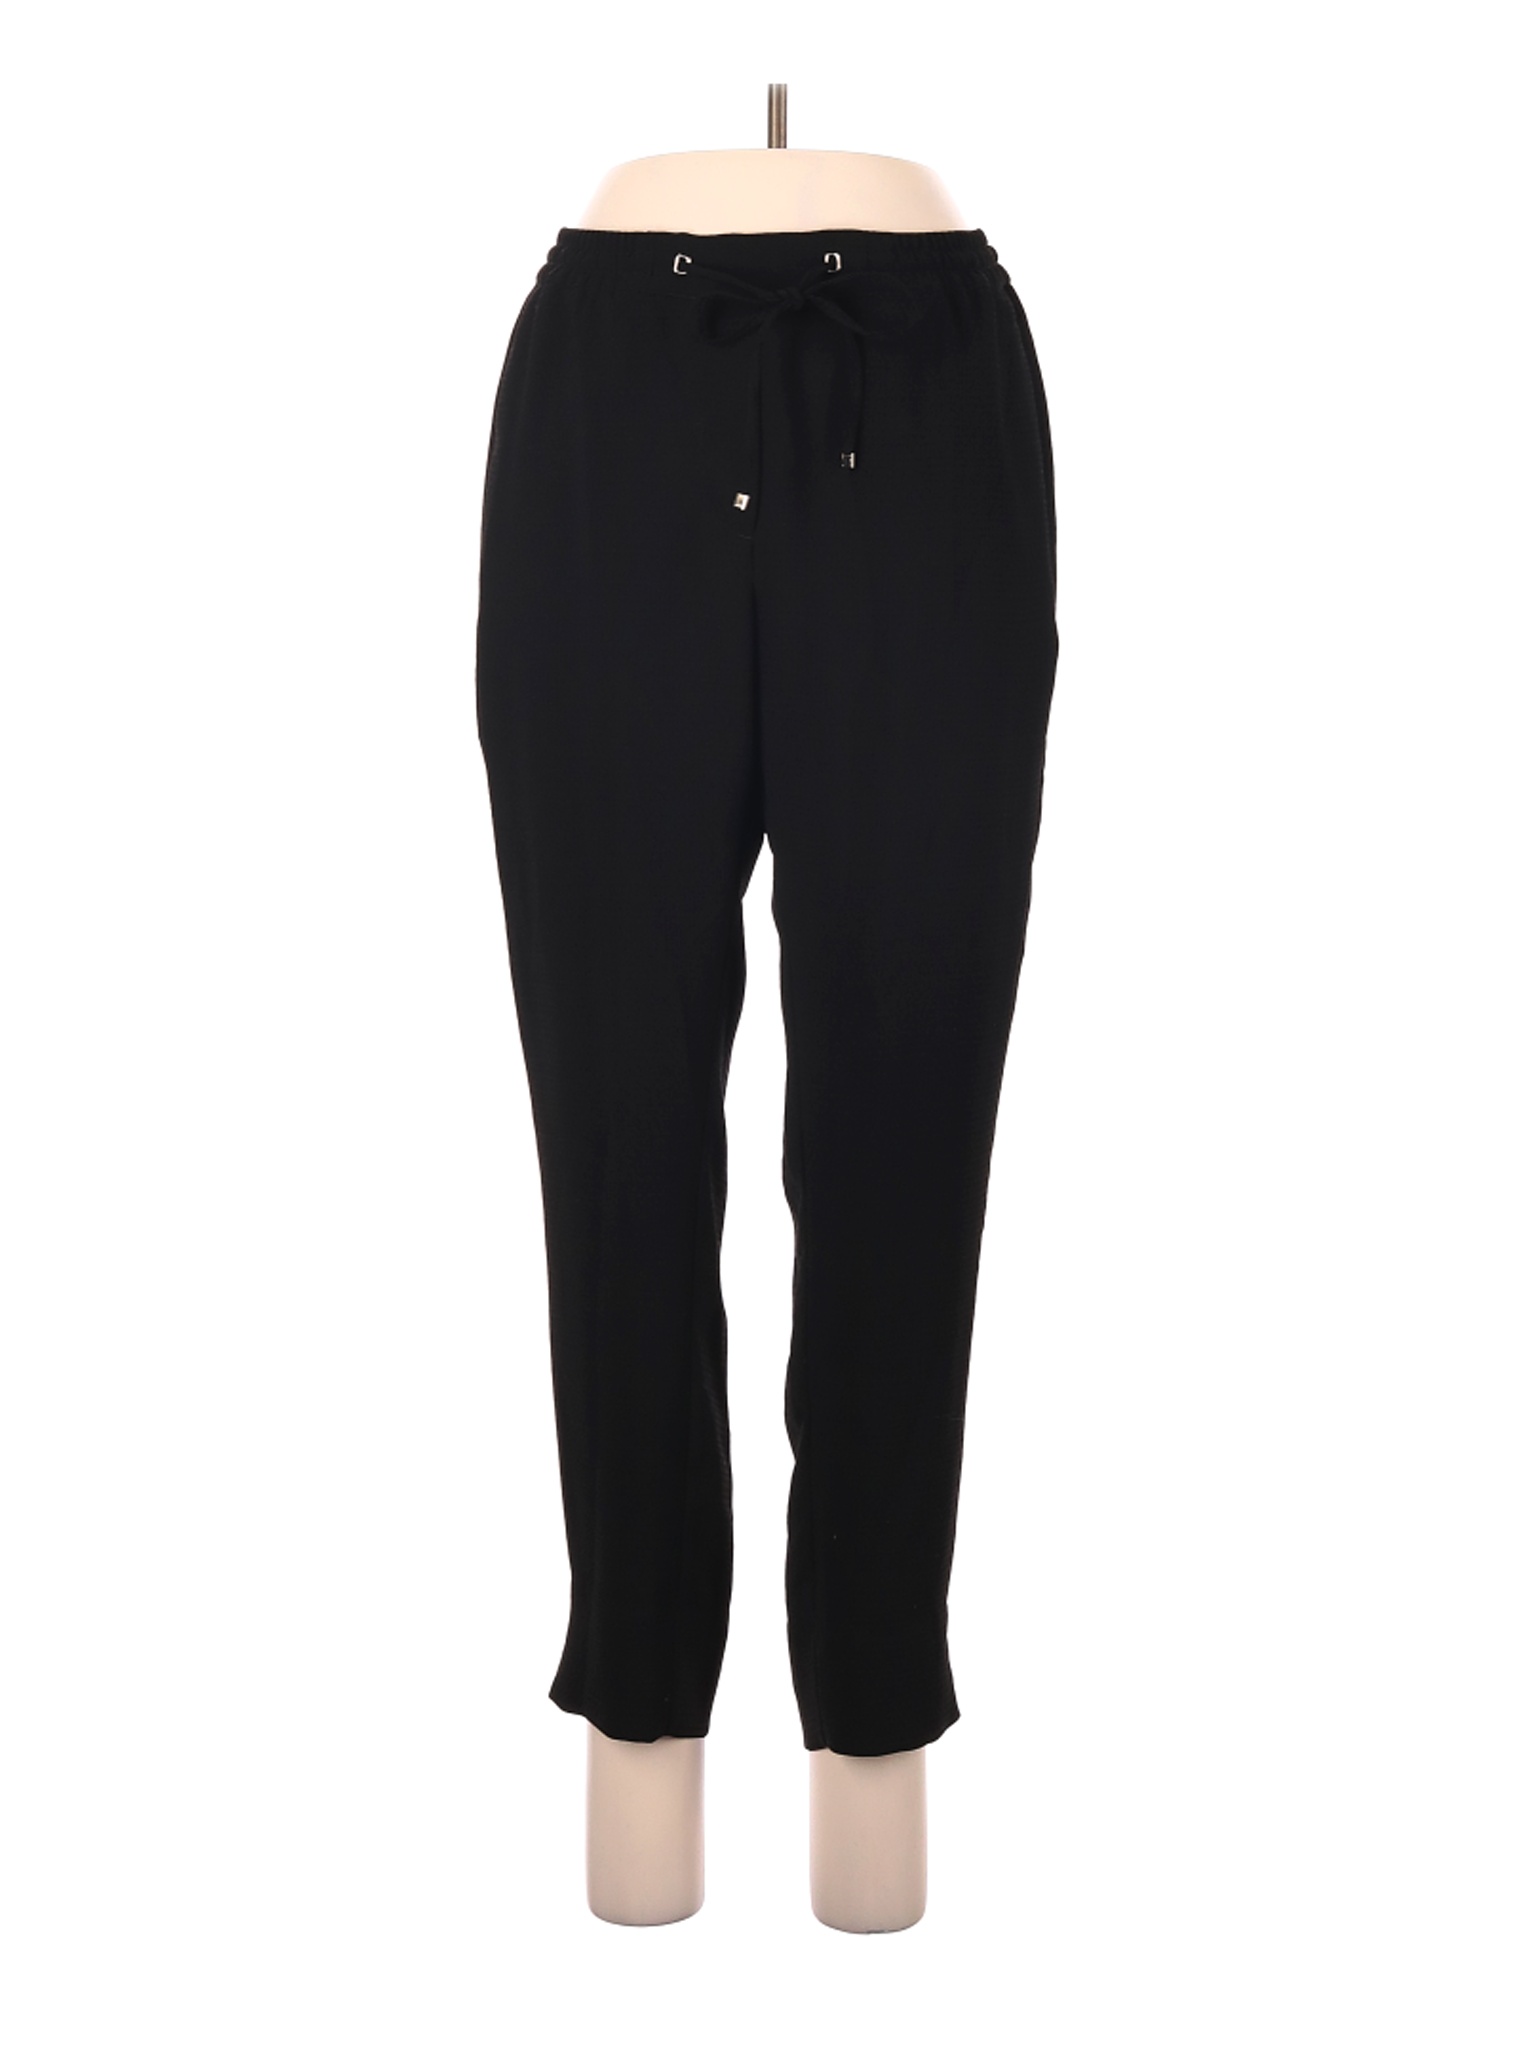 H&M Women Black Casual Pants 10 | eBay